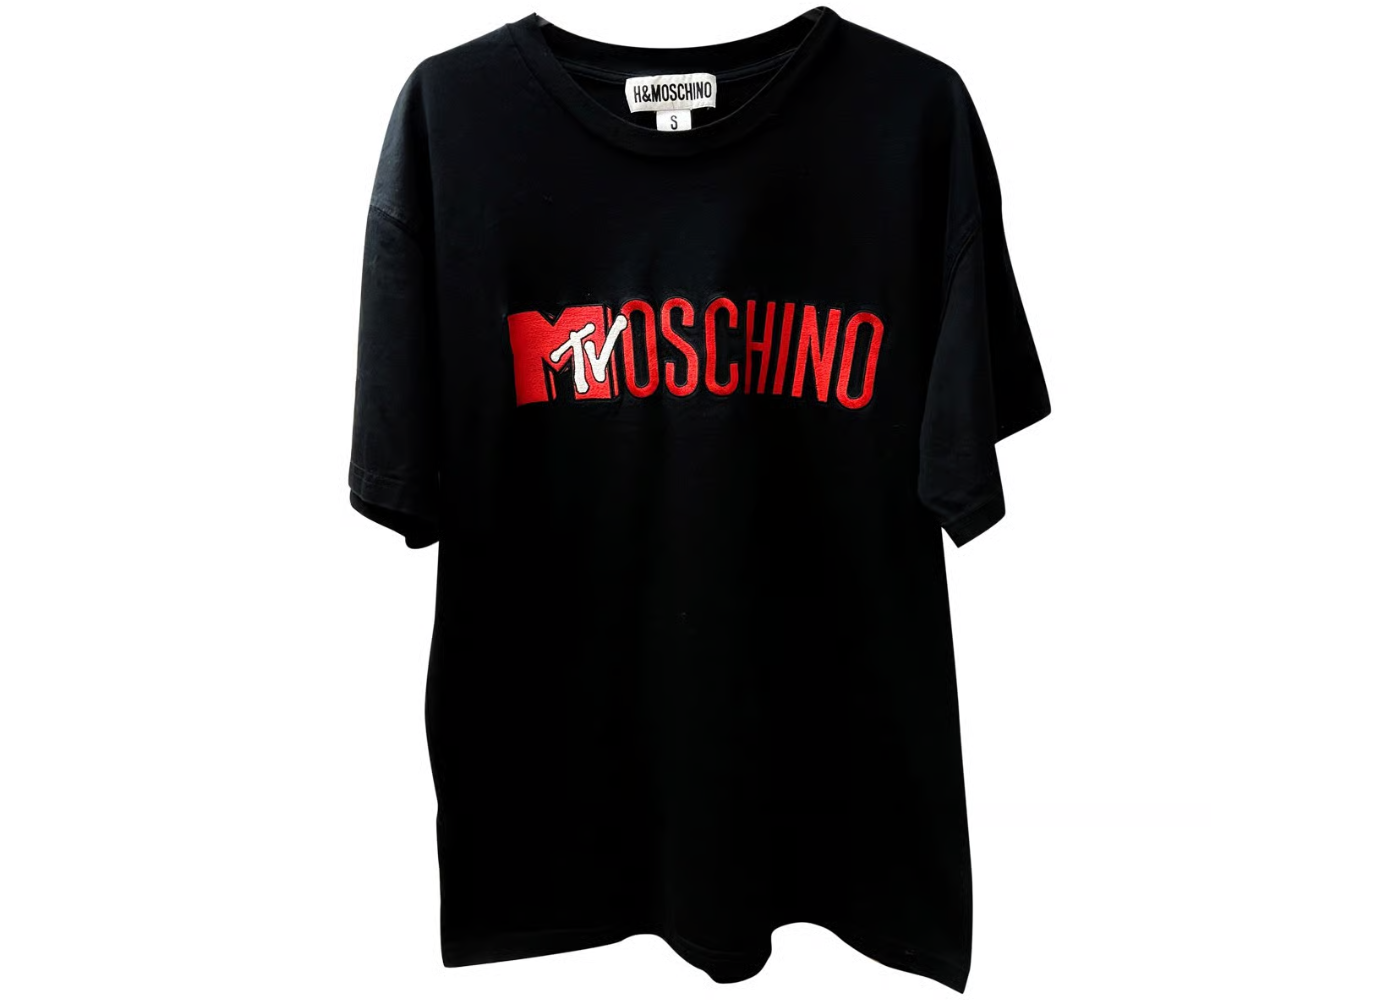 H&M Moschino Embroidered MTV Black Shirt